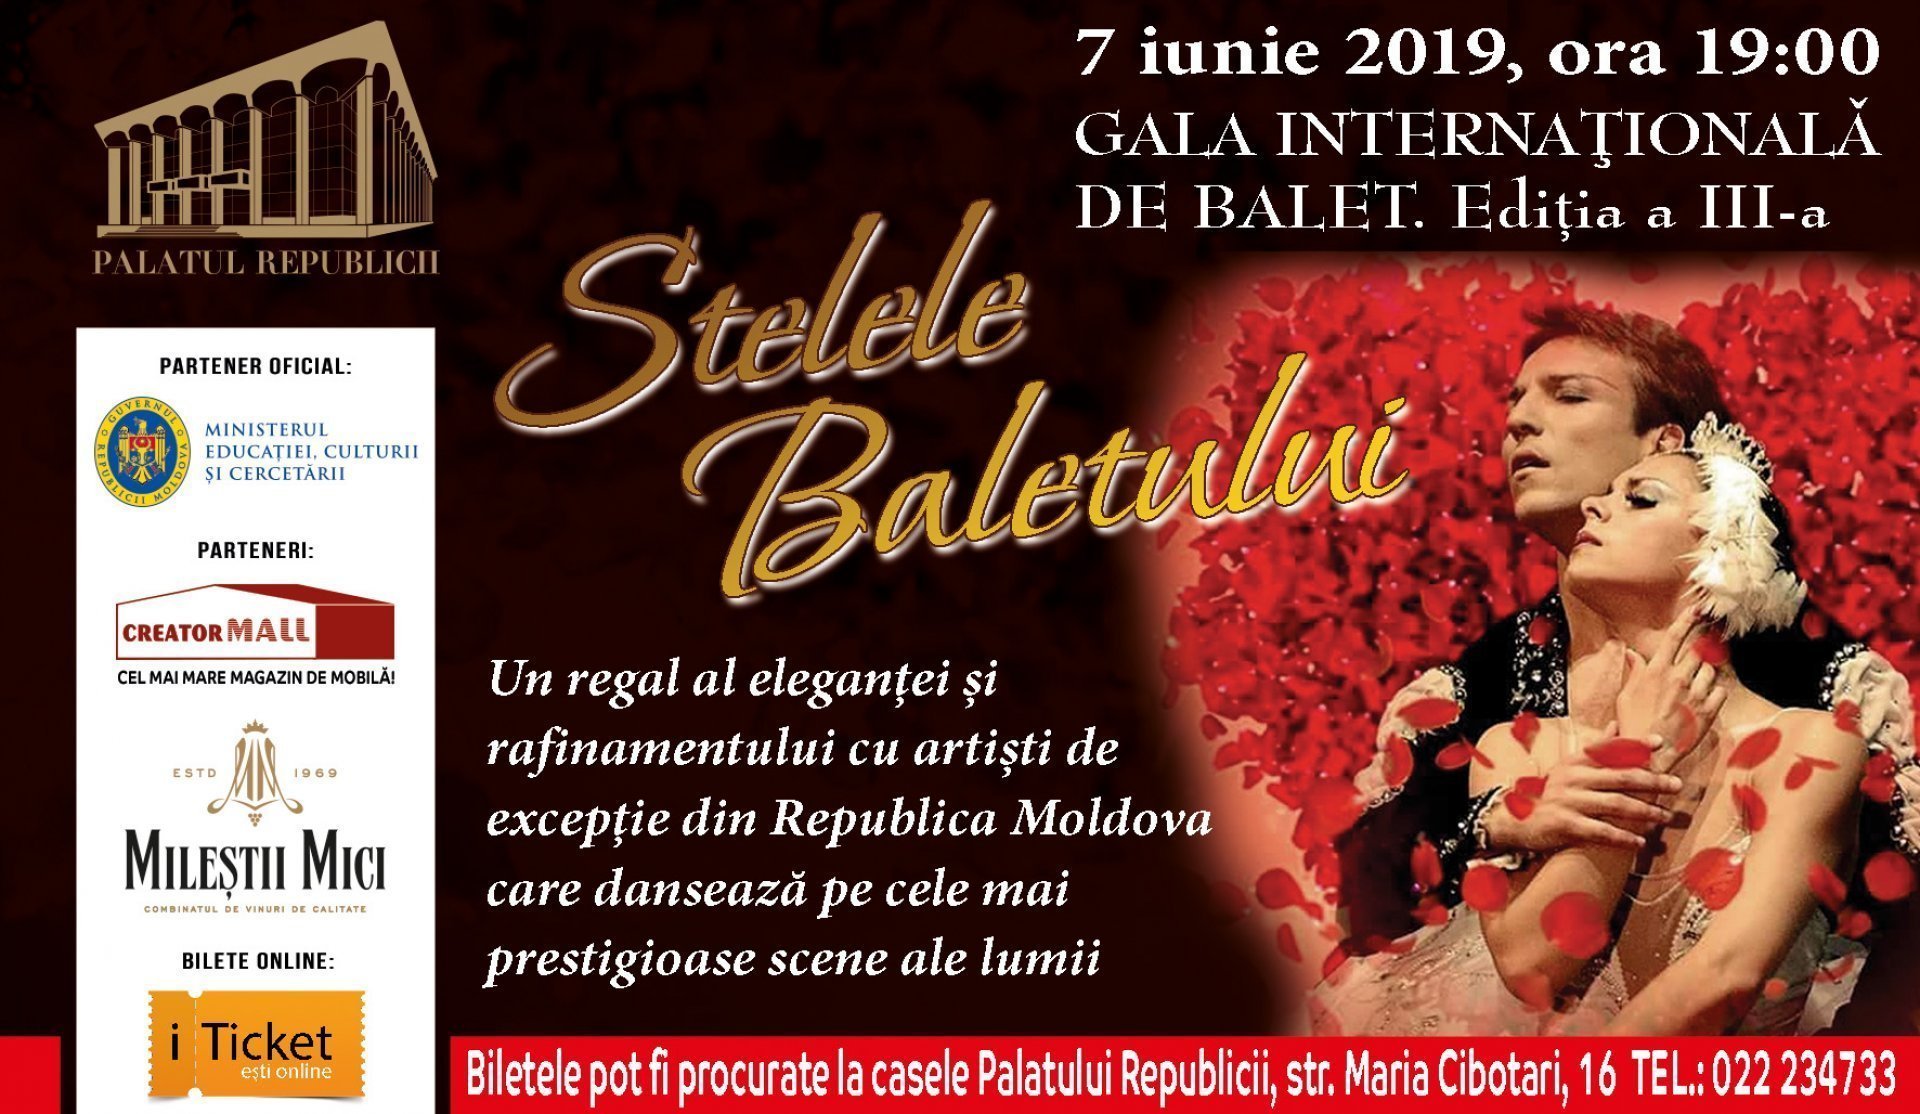 Gala Internationala de Balet 2019